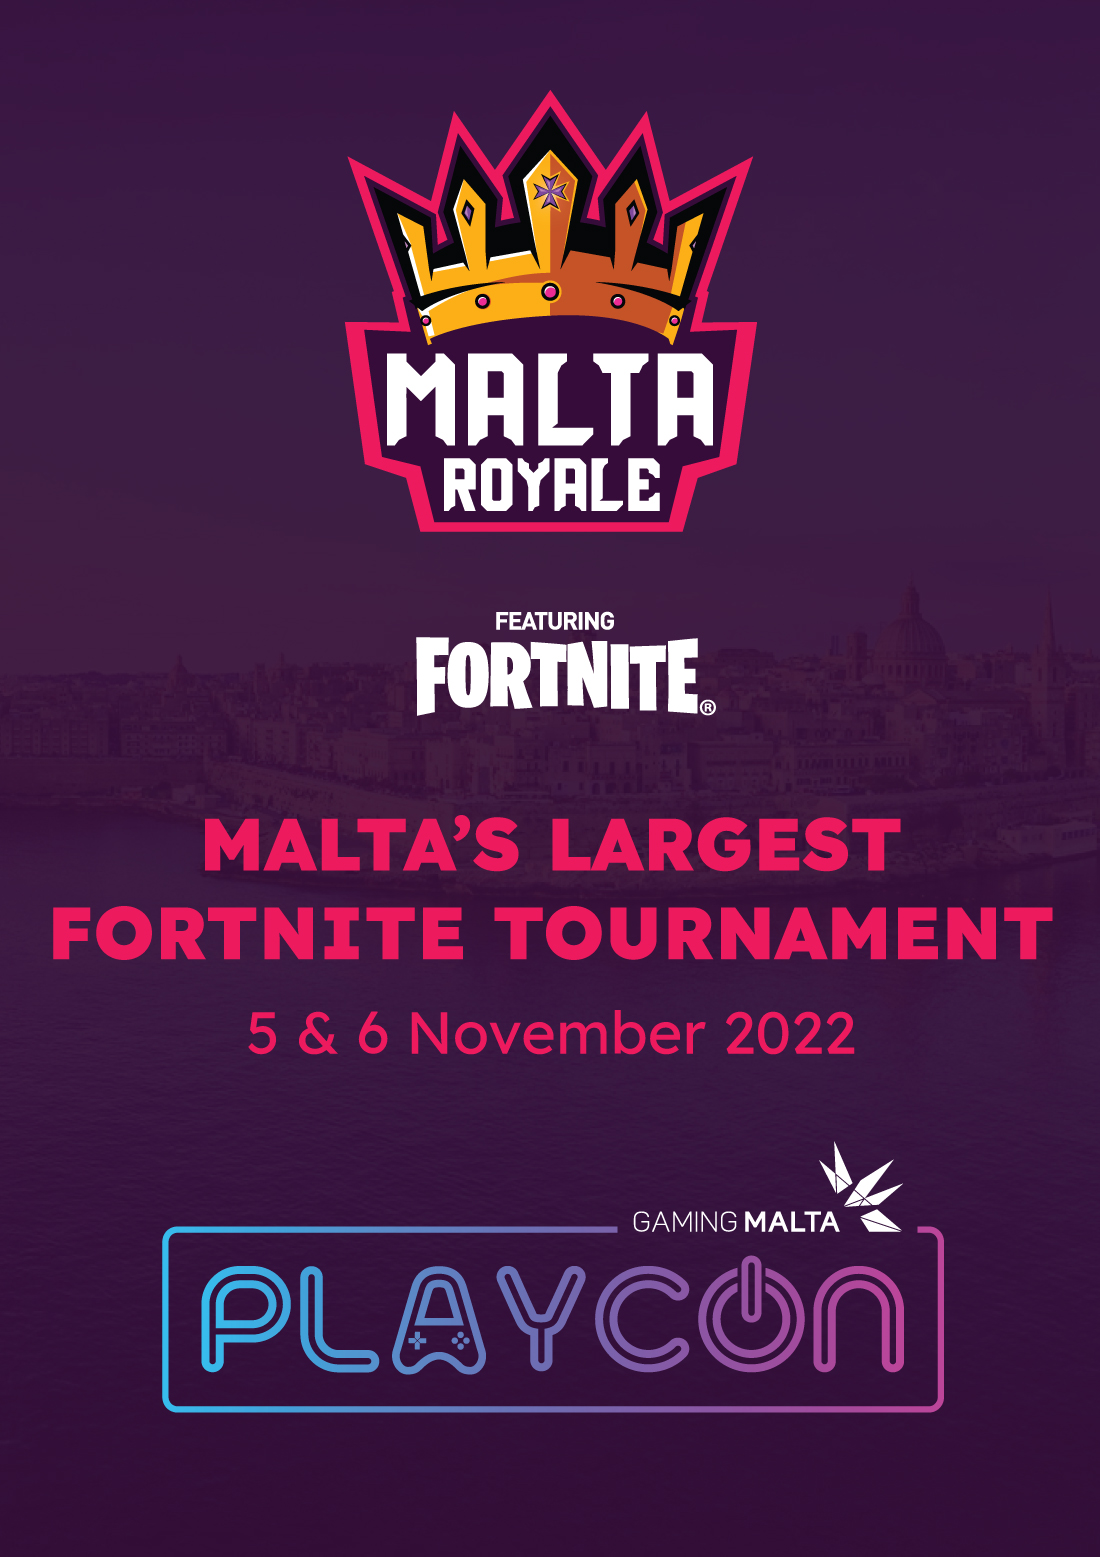 Playcon - Malta Royale (Fortnite Tournament) poster